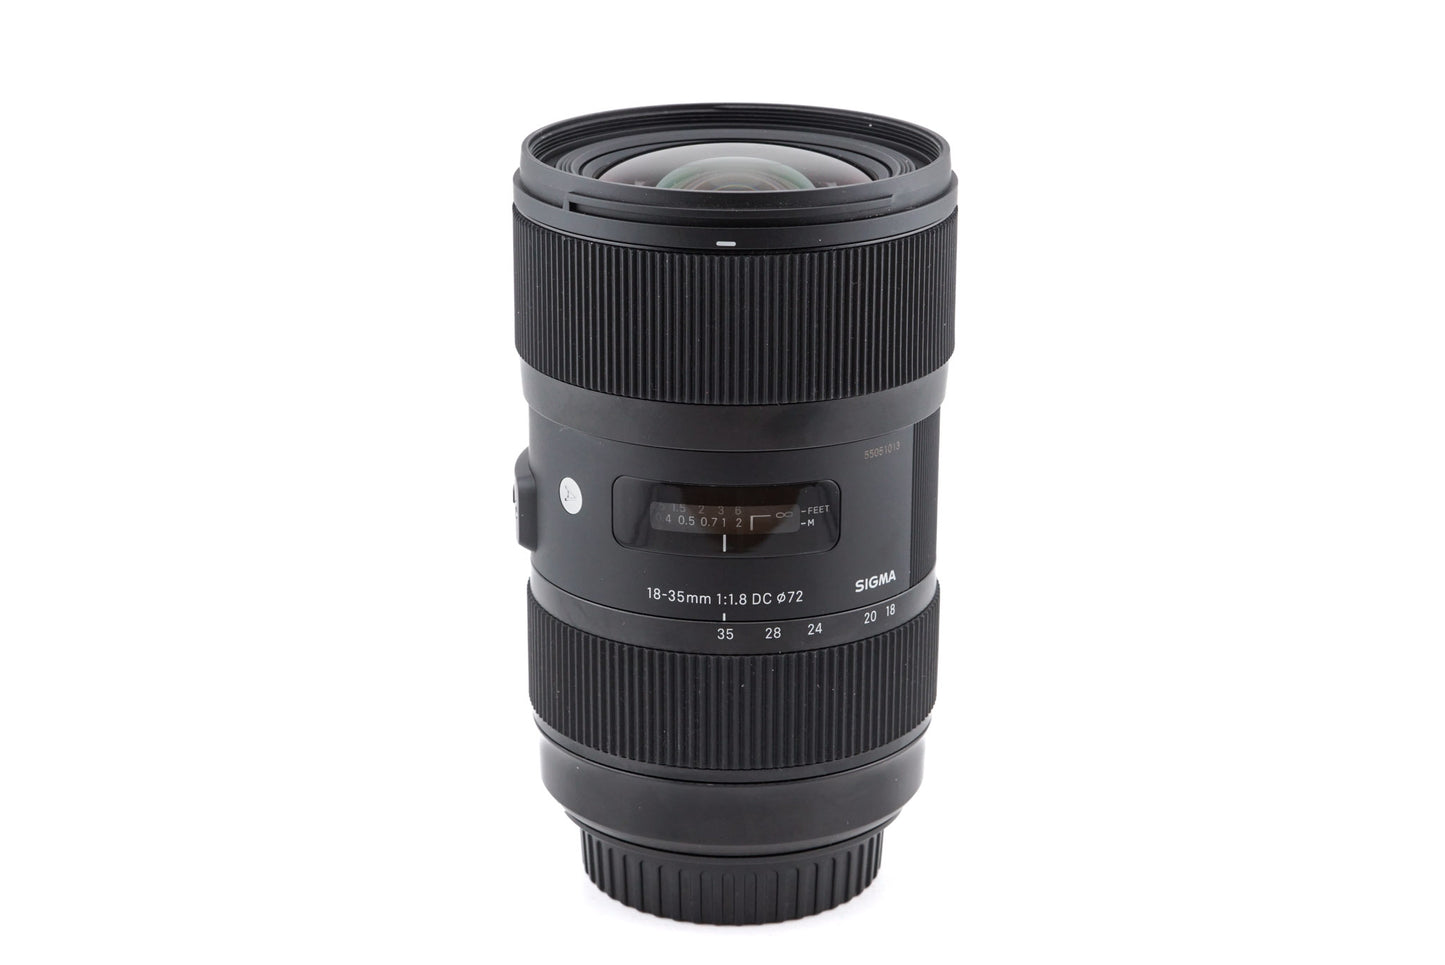 Sigma 18-35mm f1.8 DC HSM Art - Lens